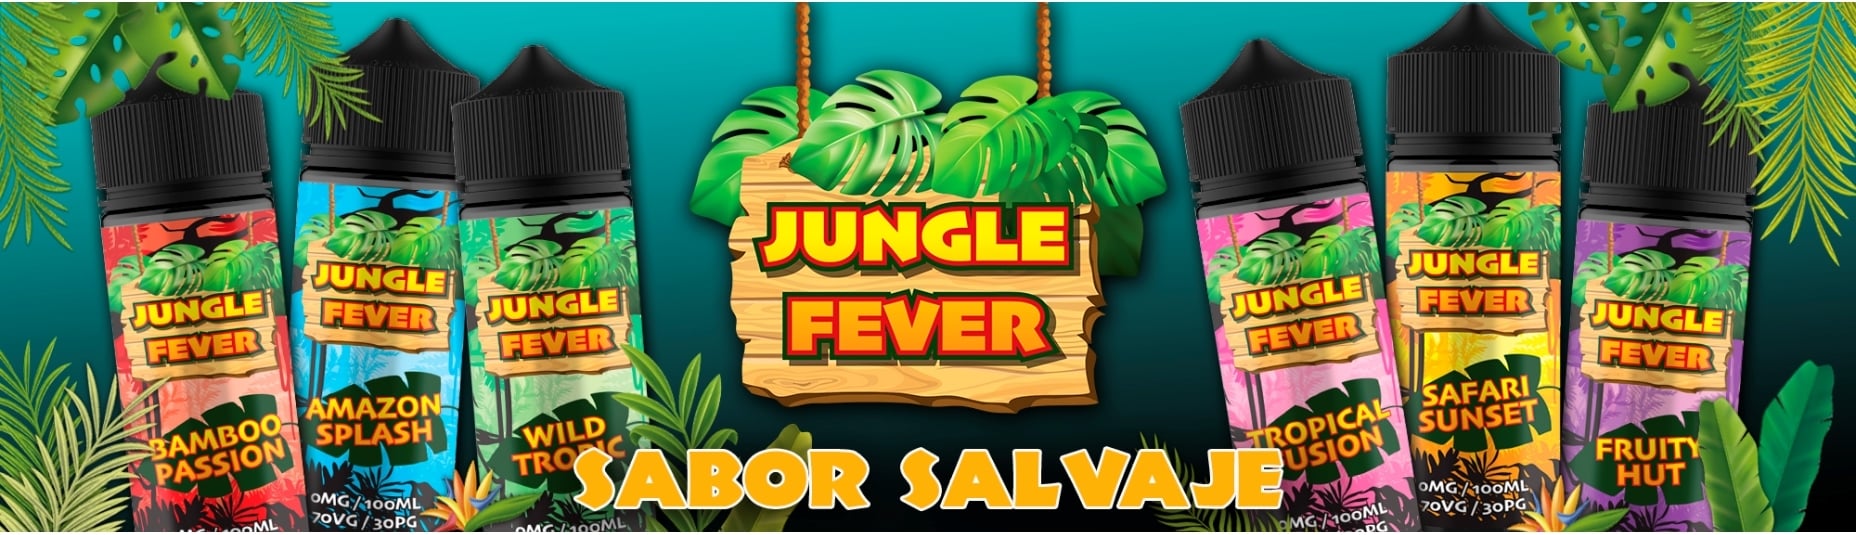 Wild Tropic - Jungle Fever 100ml